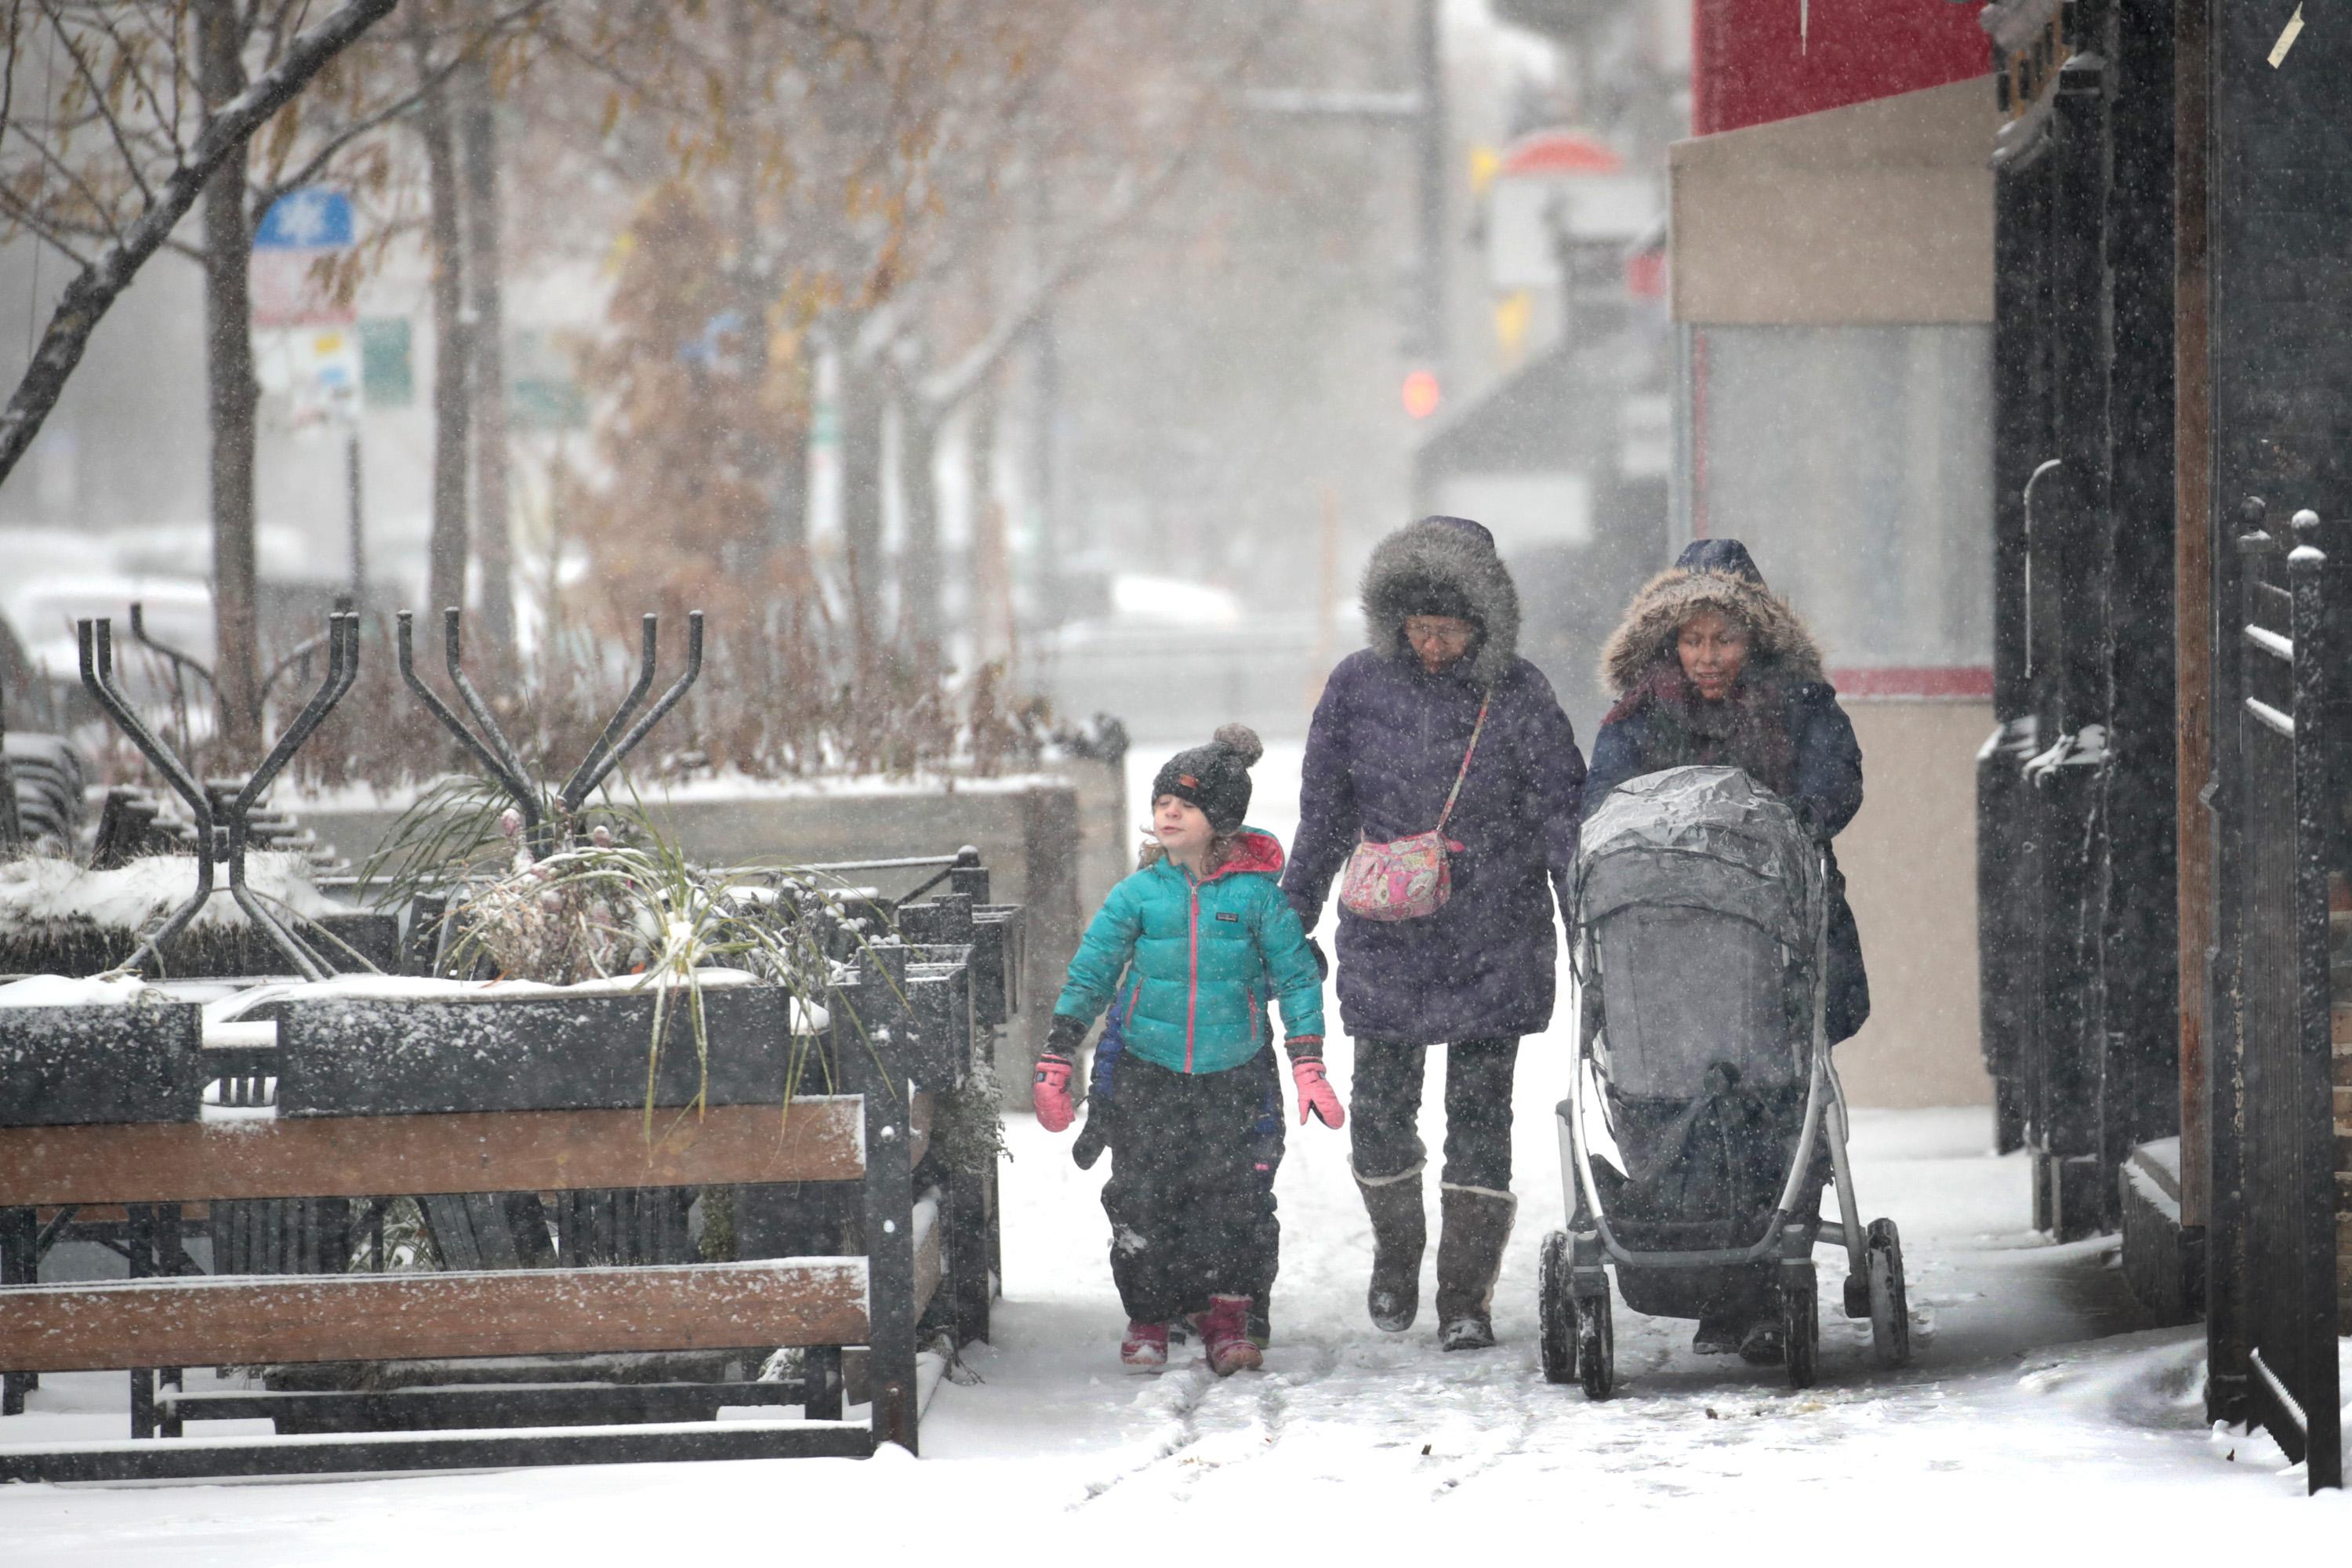 People navigate snow-covered sidewalks in Chicago.